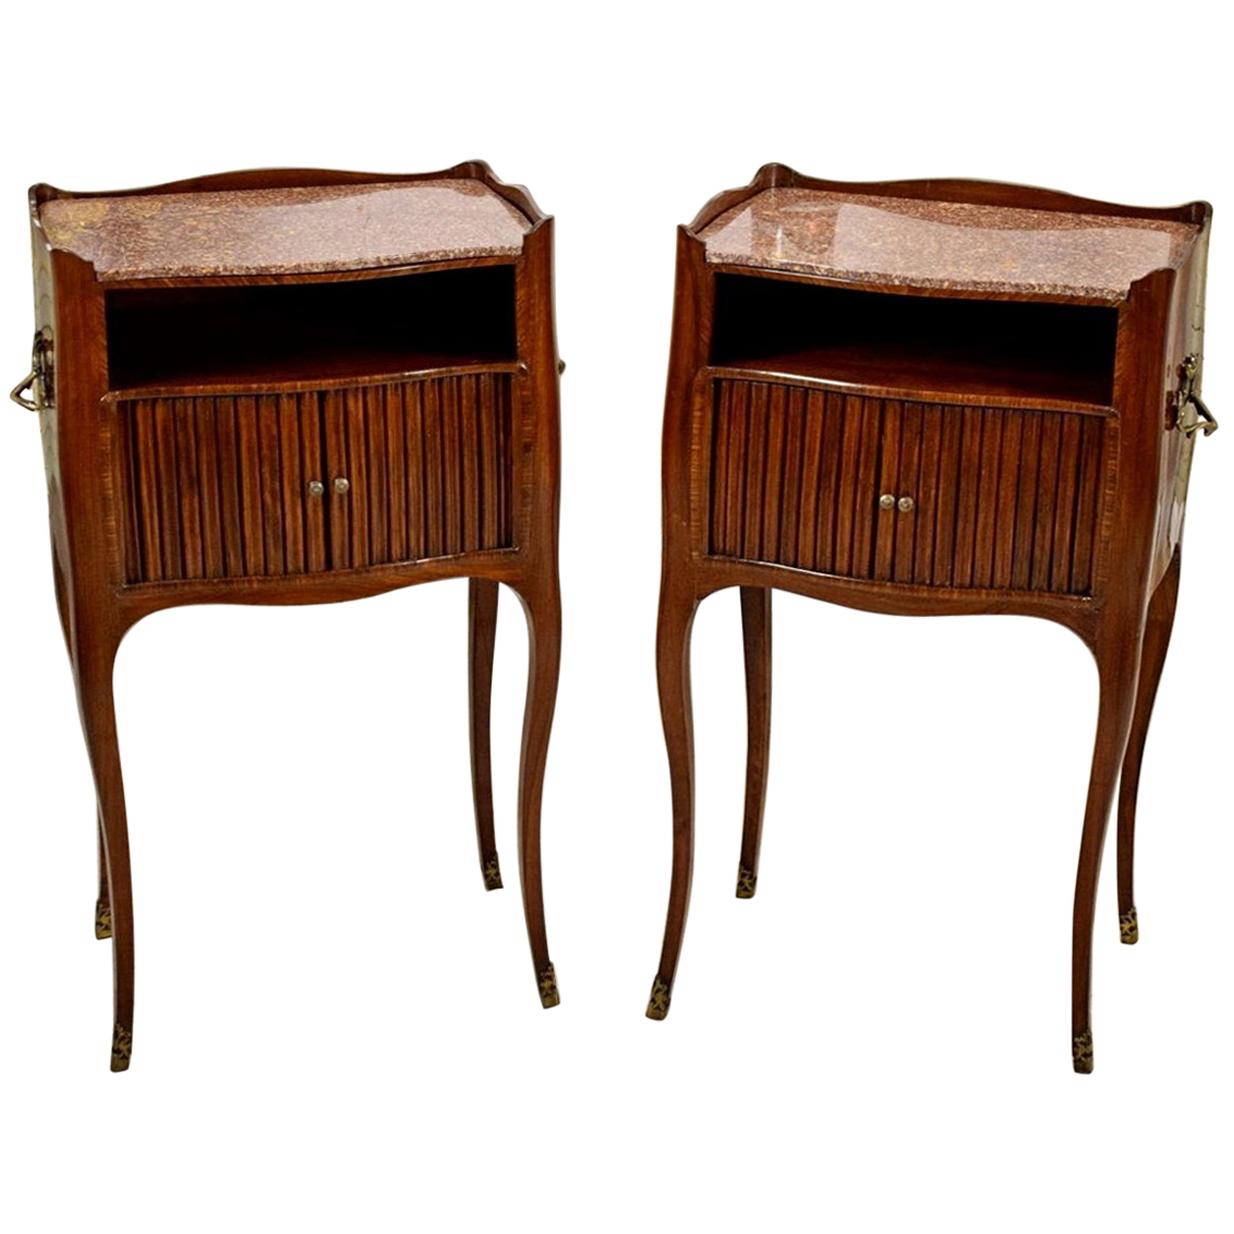 19th Century, Pair of Italian Walnut Wood Bedside Tables